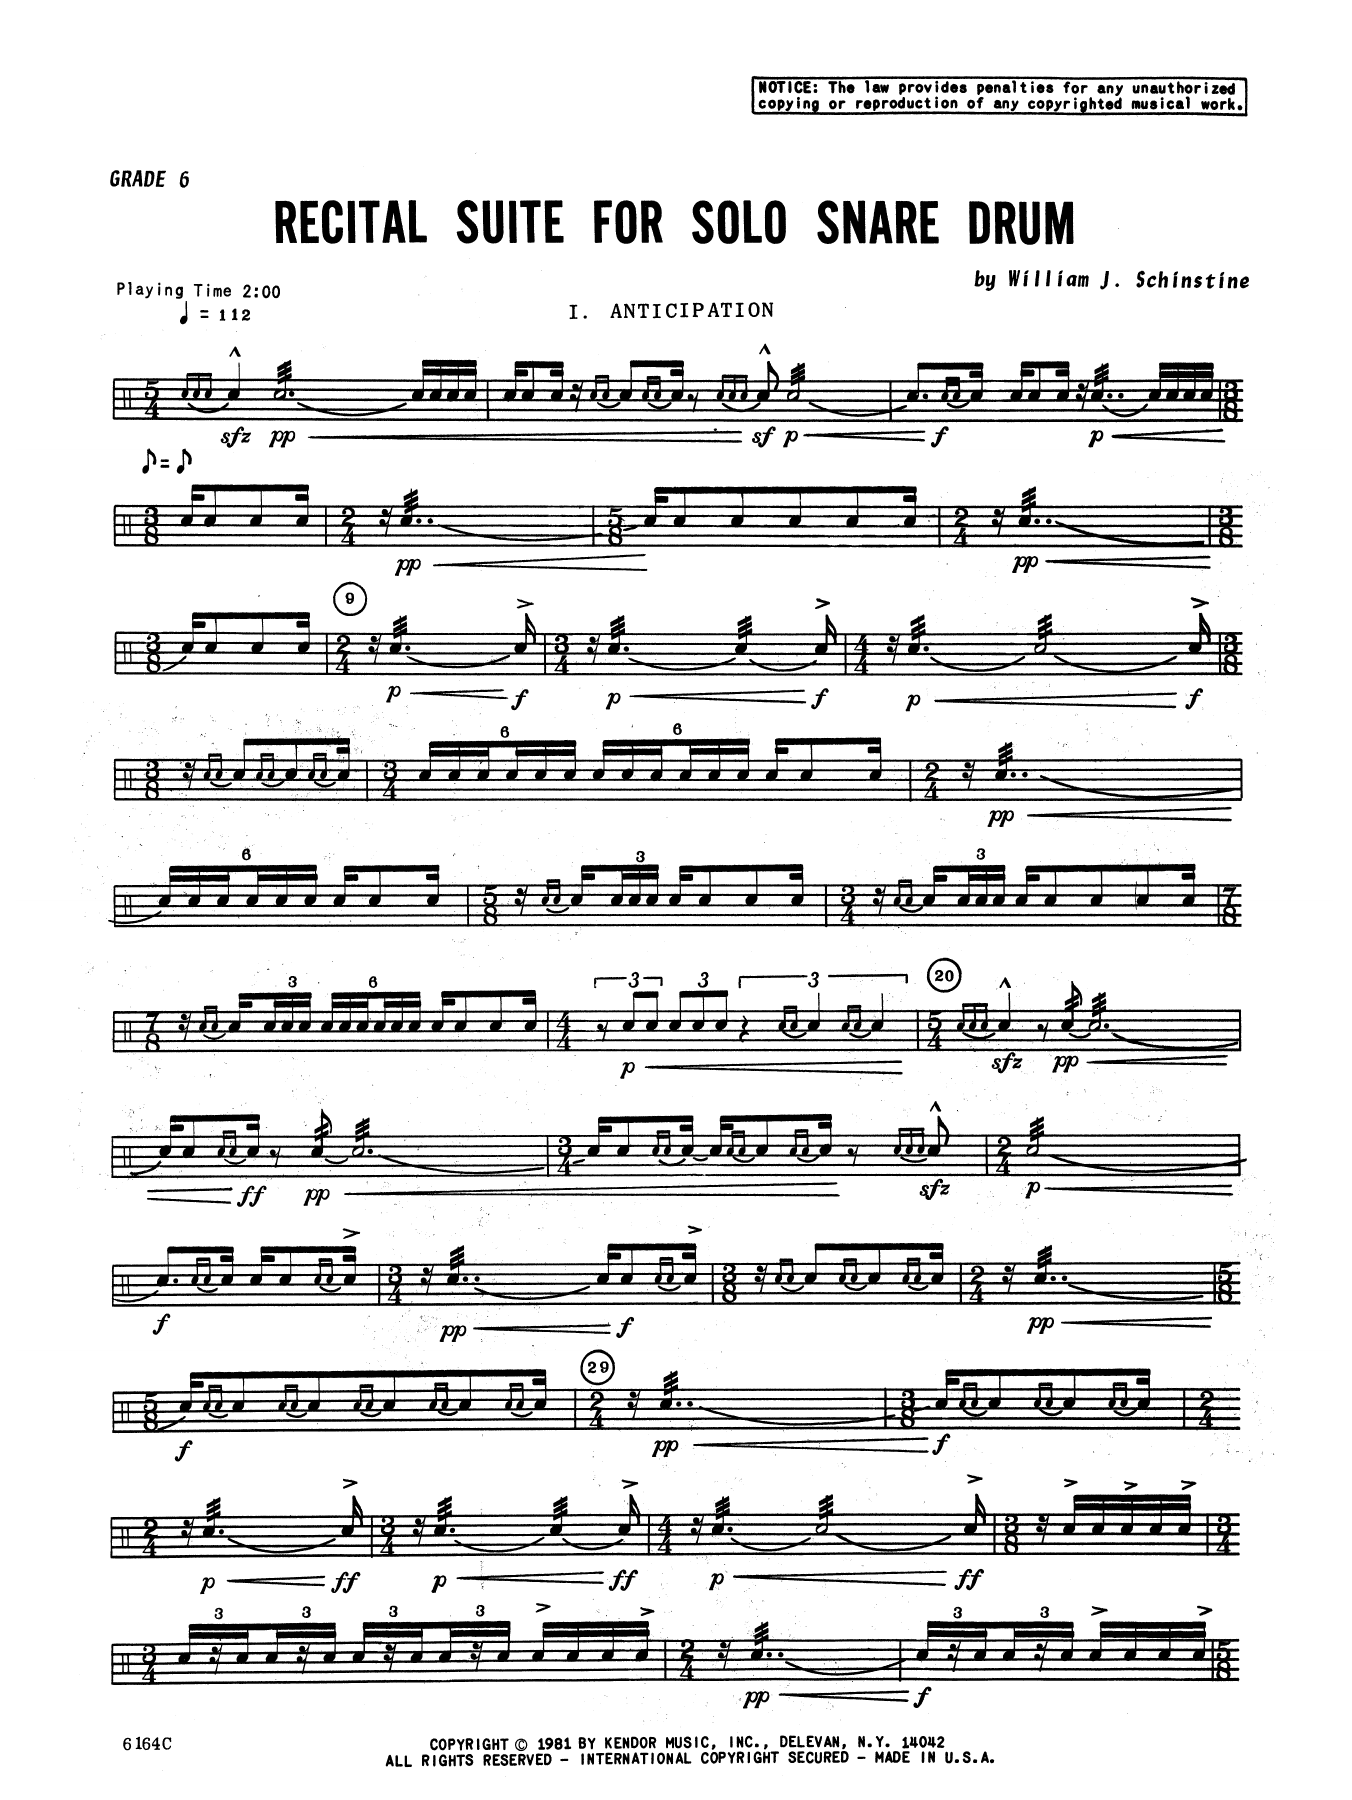 Download William Schinstine Recital Suite For Solo Snare Drum Sheet Music